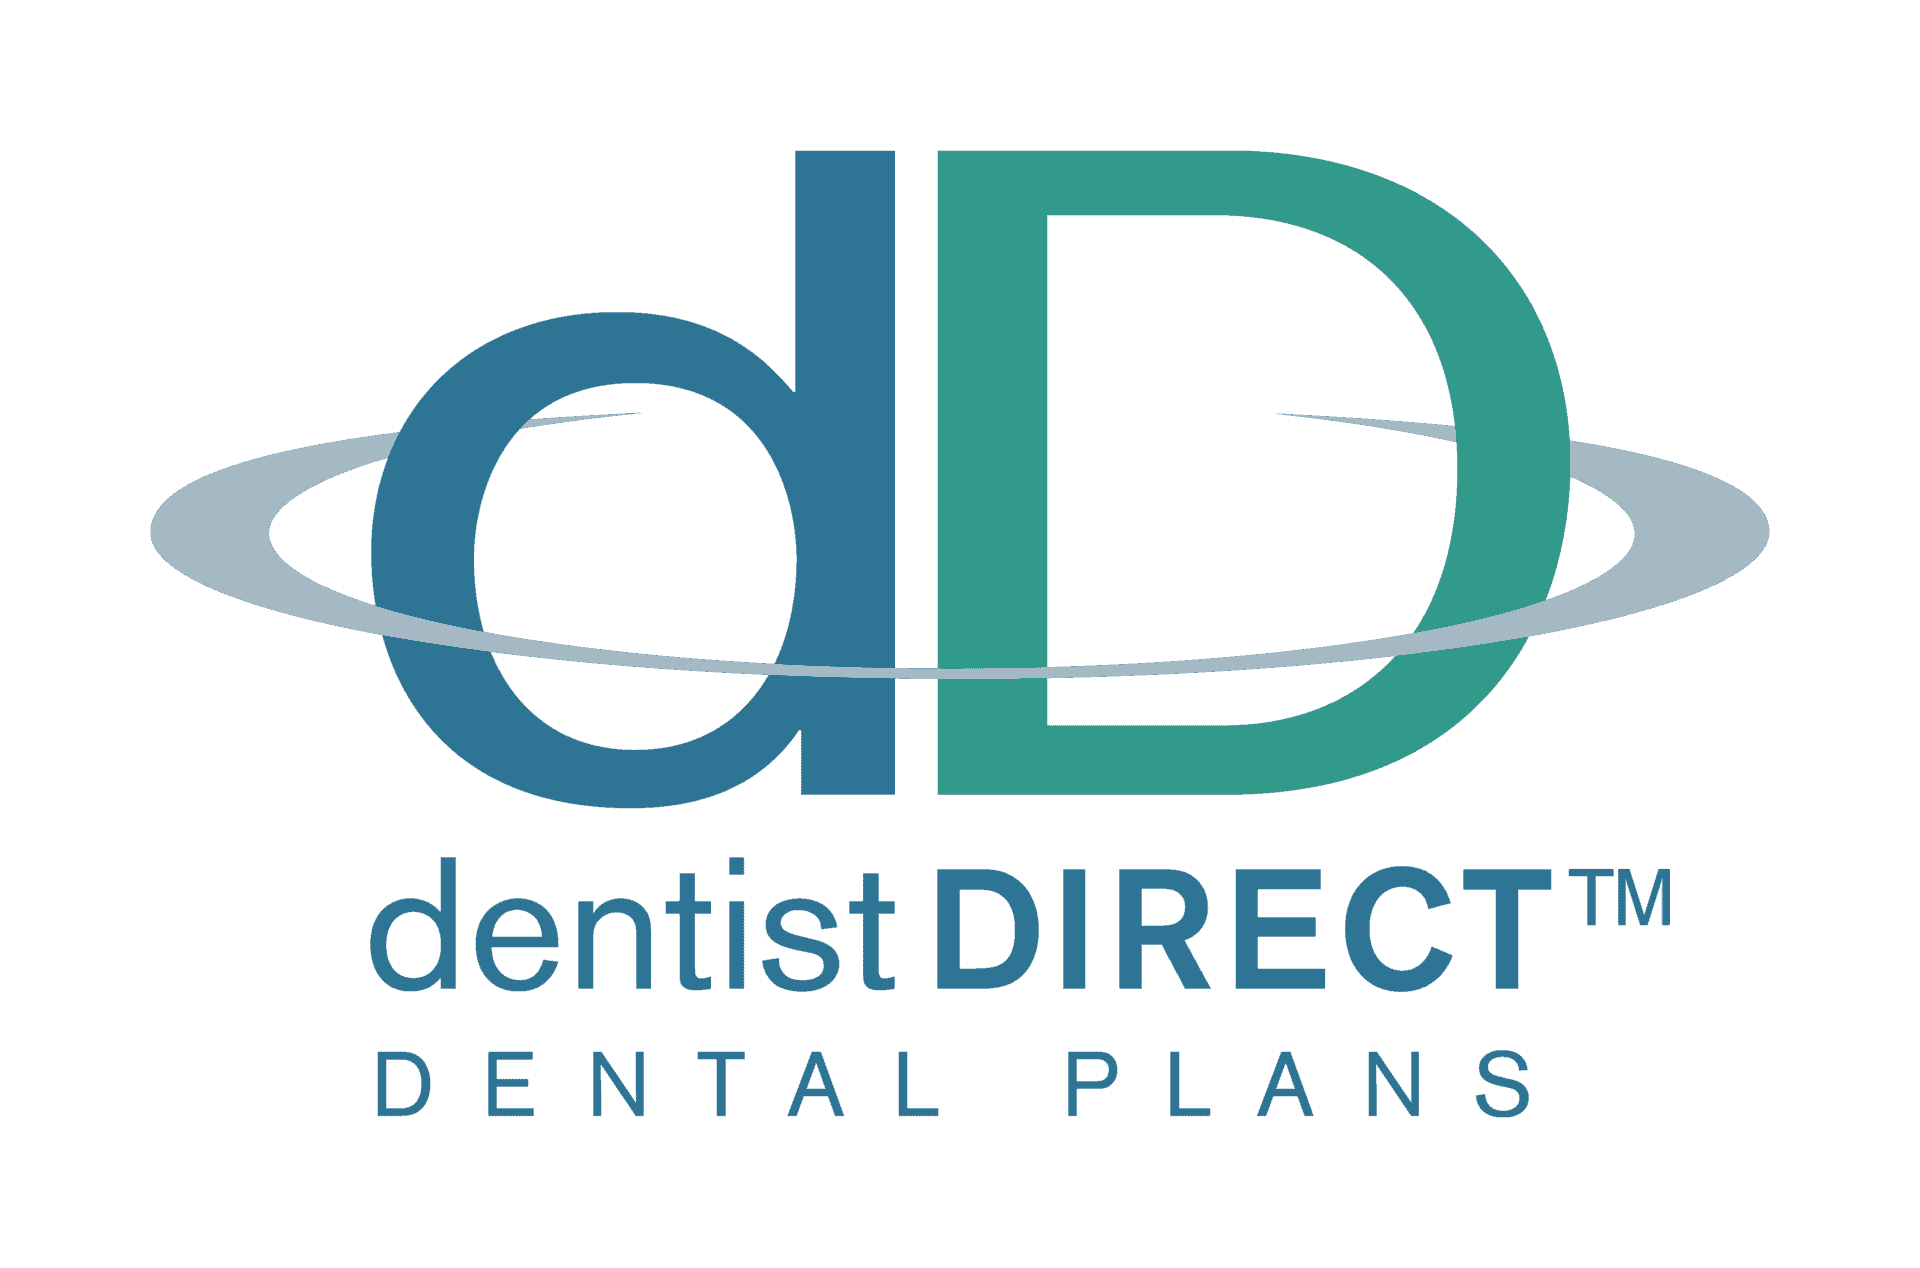 dentist DIRECT Dental Plans logo